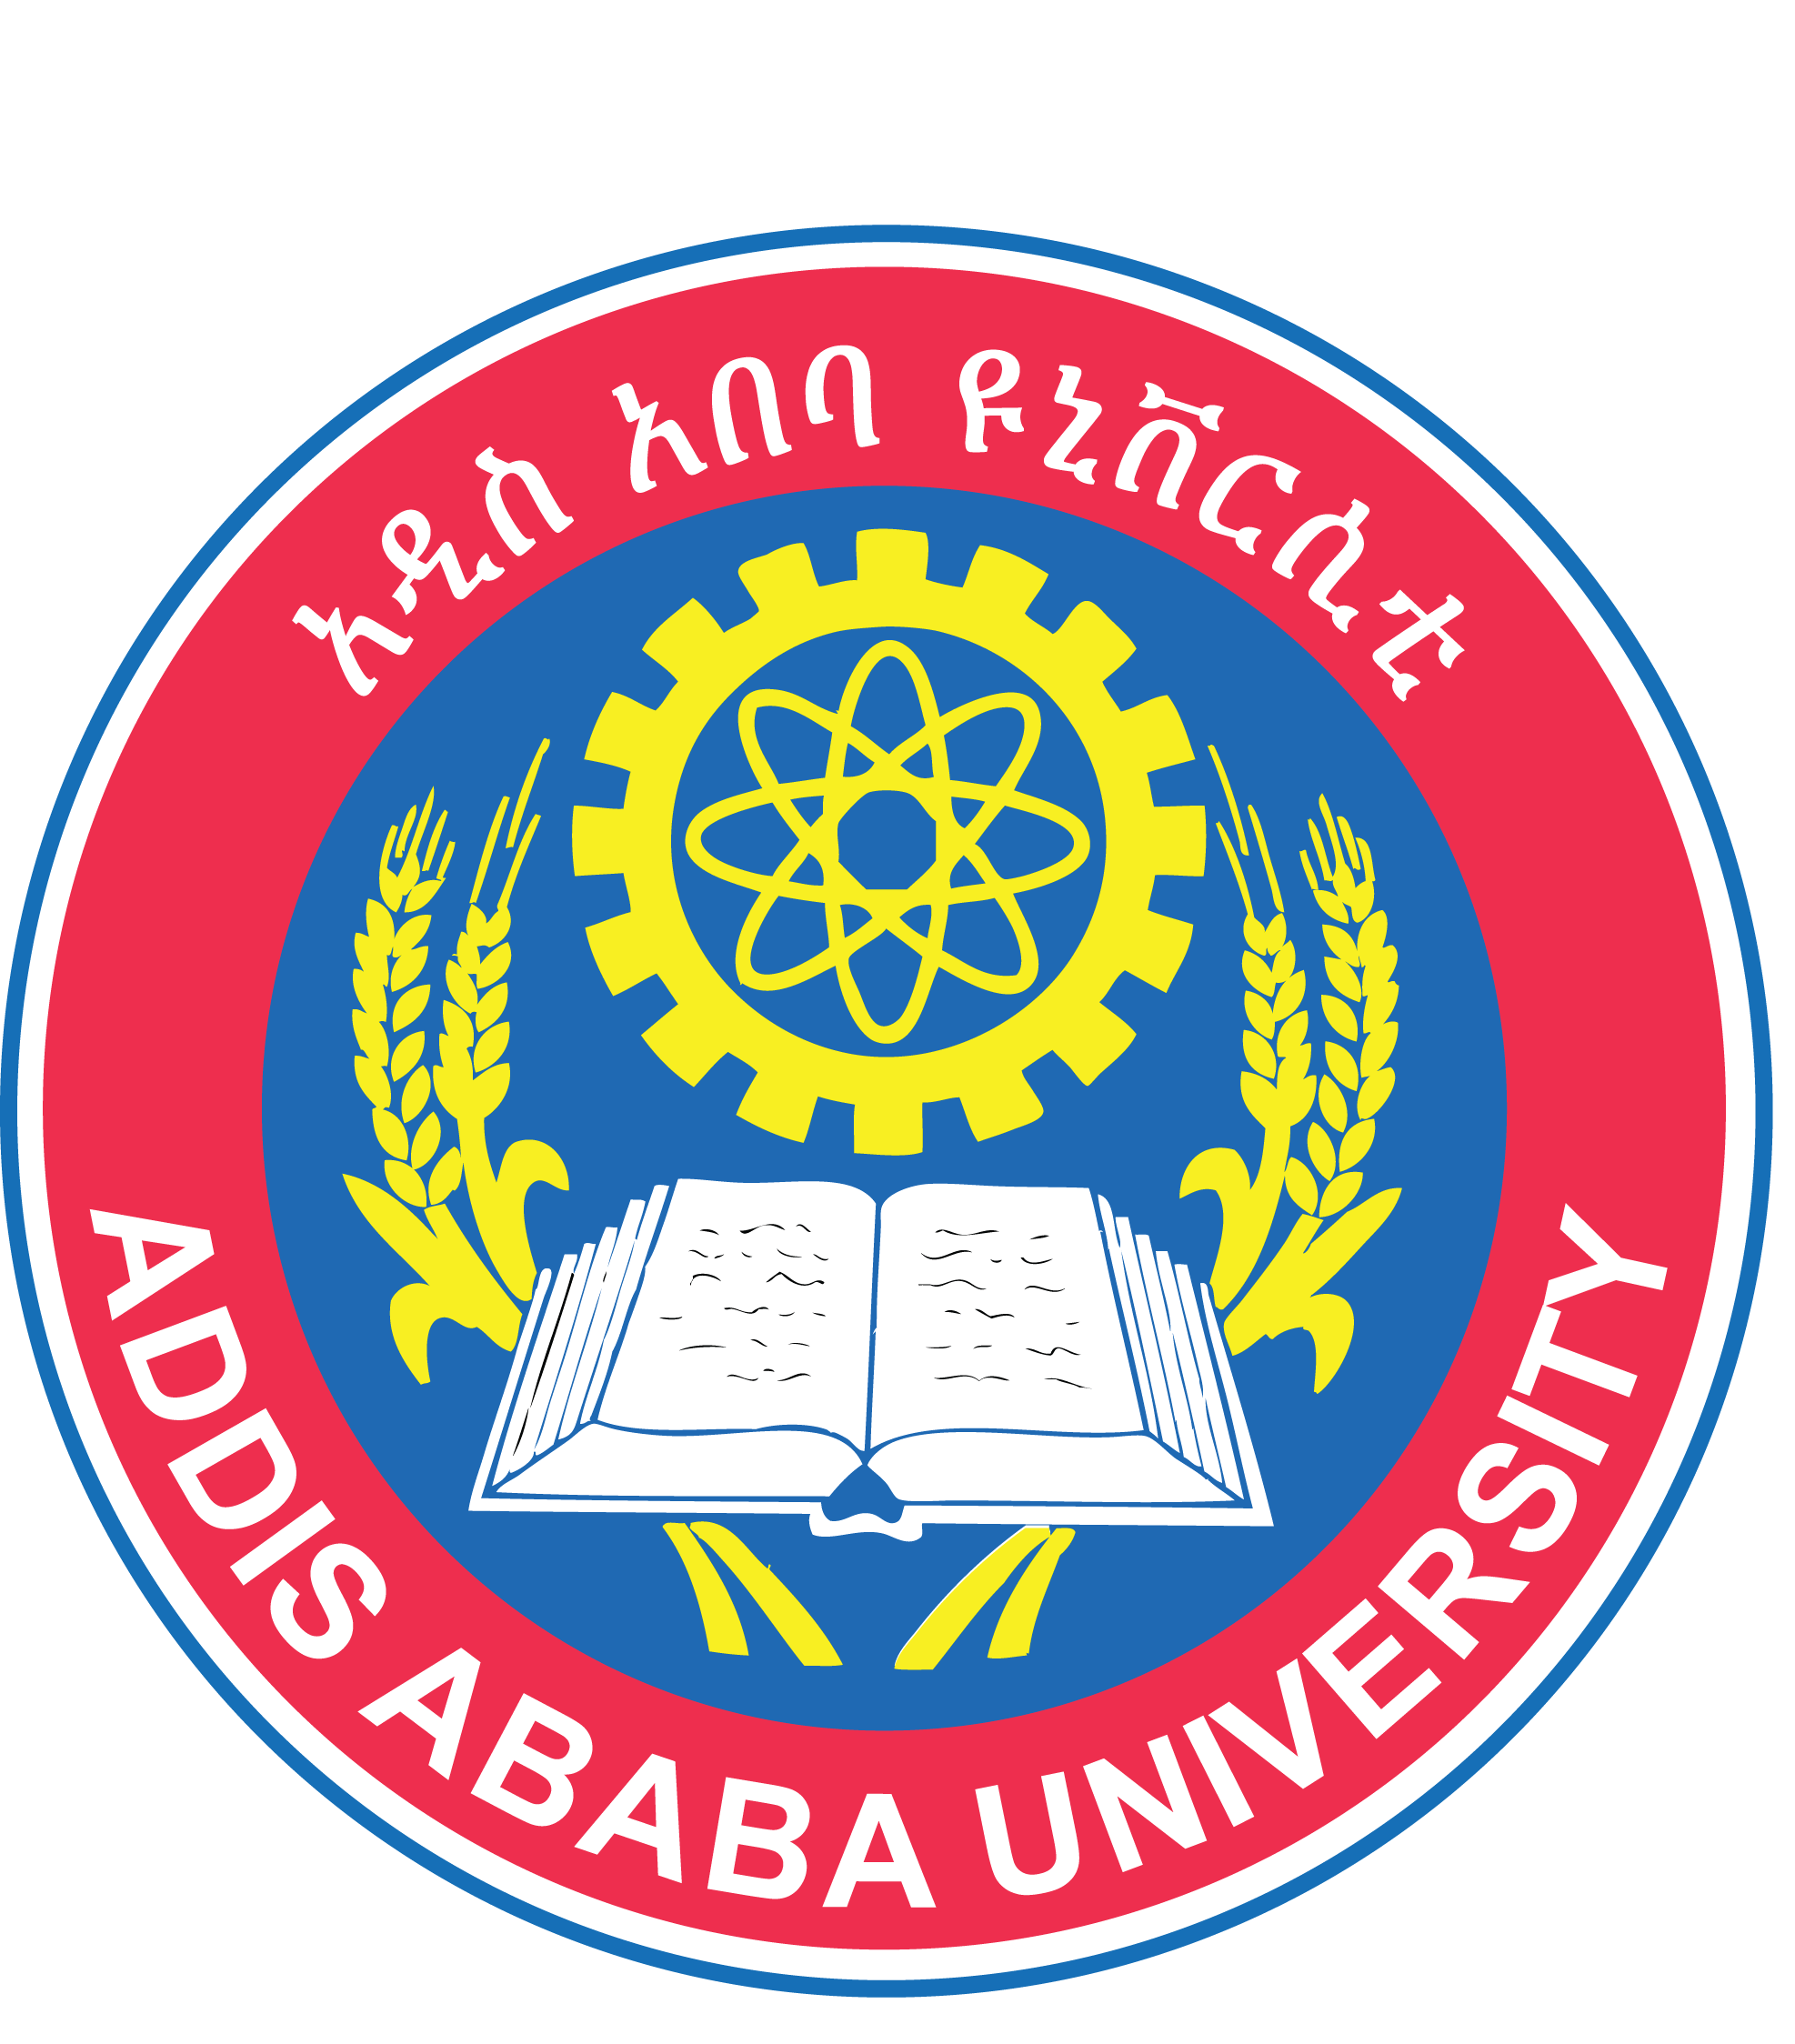 addis-abeba-university-to-open-technology-incubation-centre